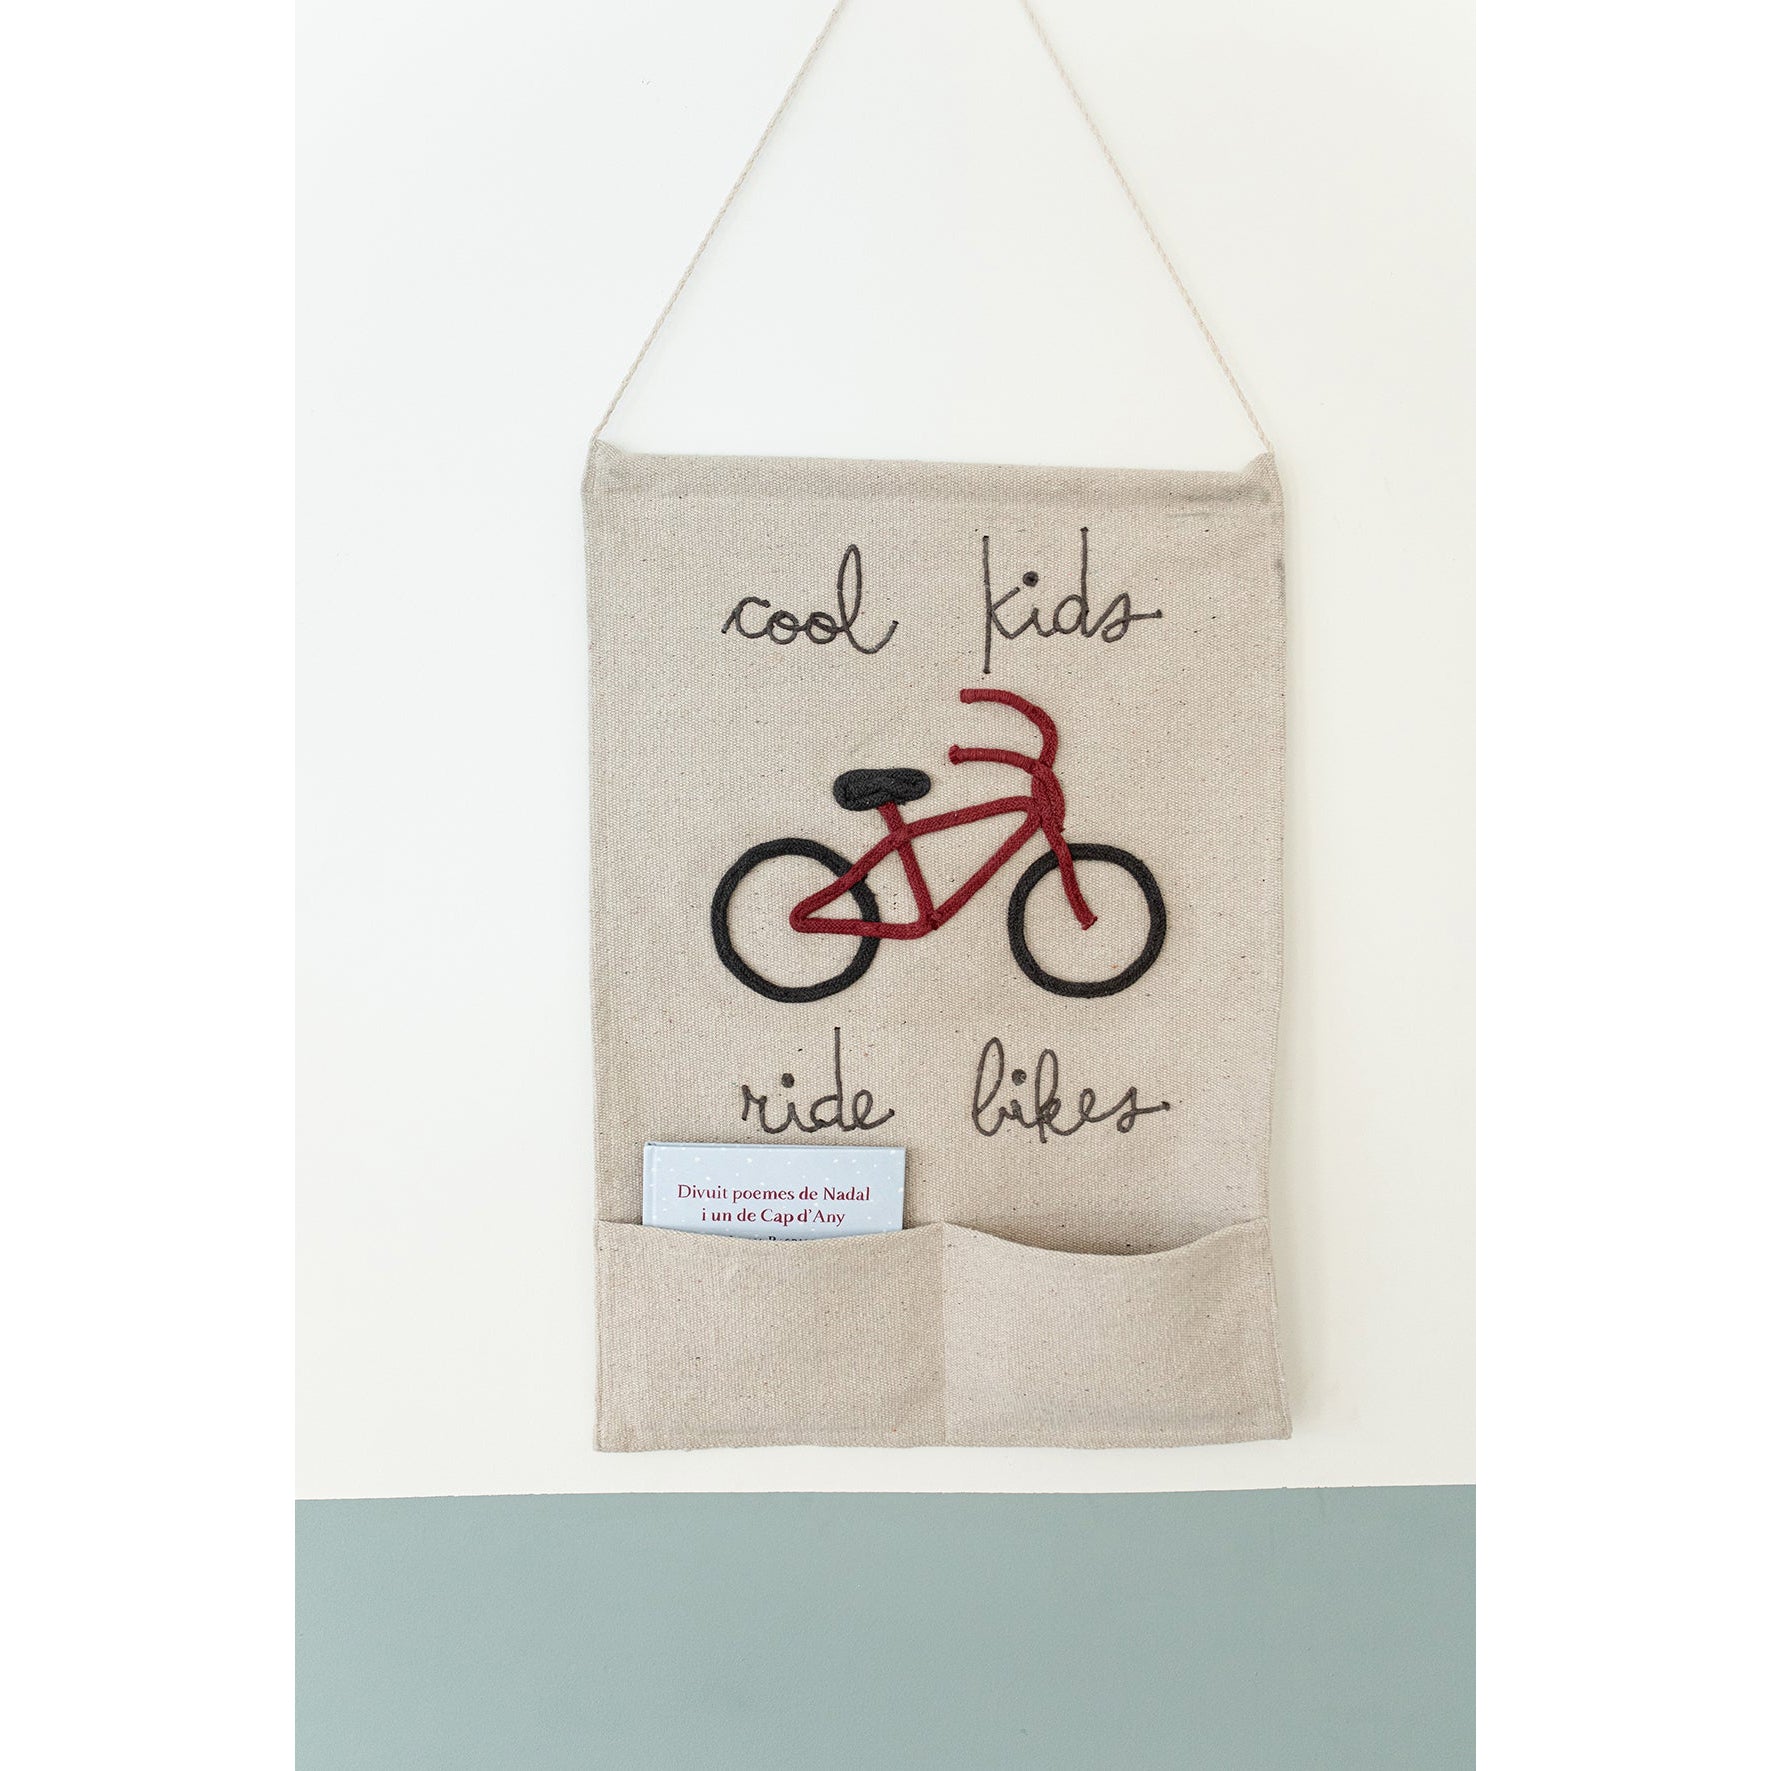 Lorena Canals Eco-City Cool Kids Ride Bikes Wall Pocket Hanger